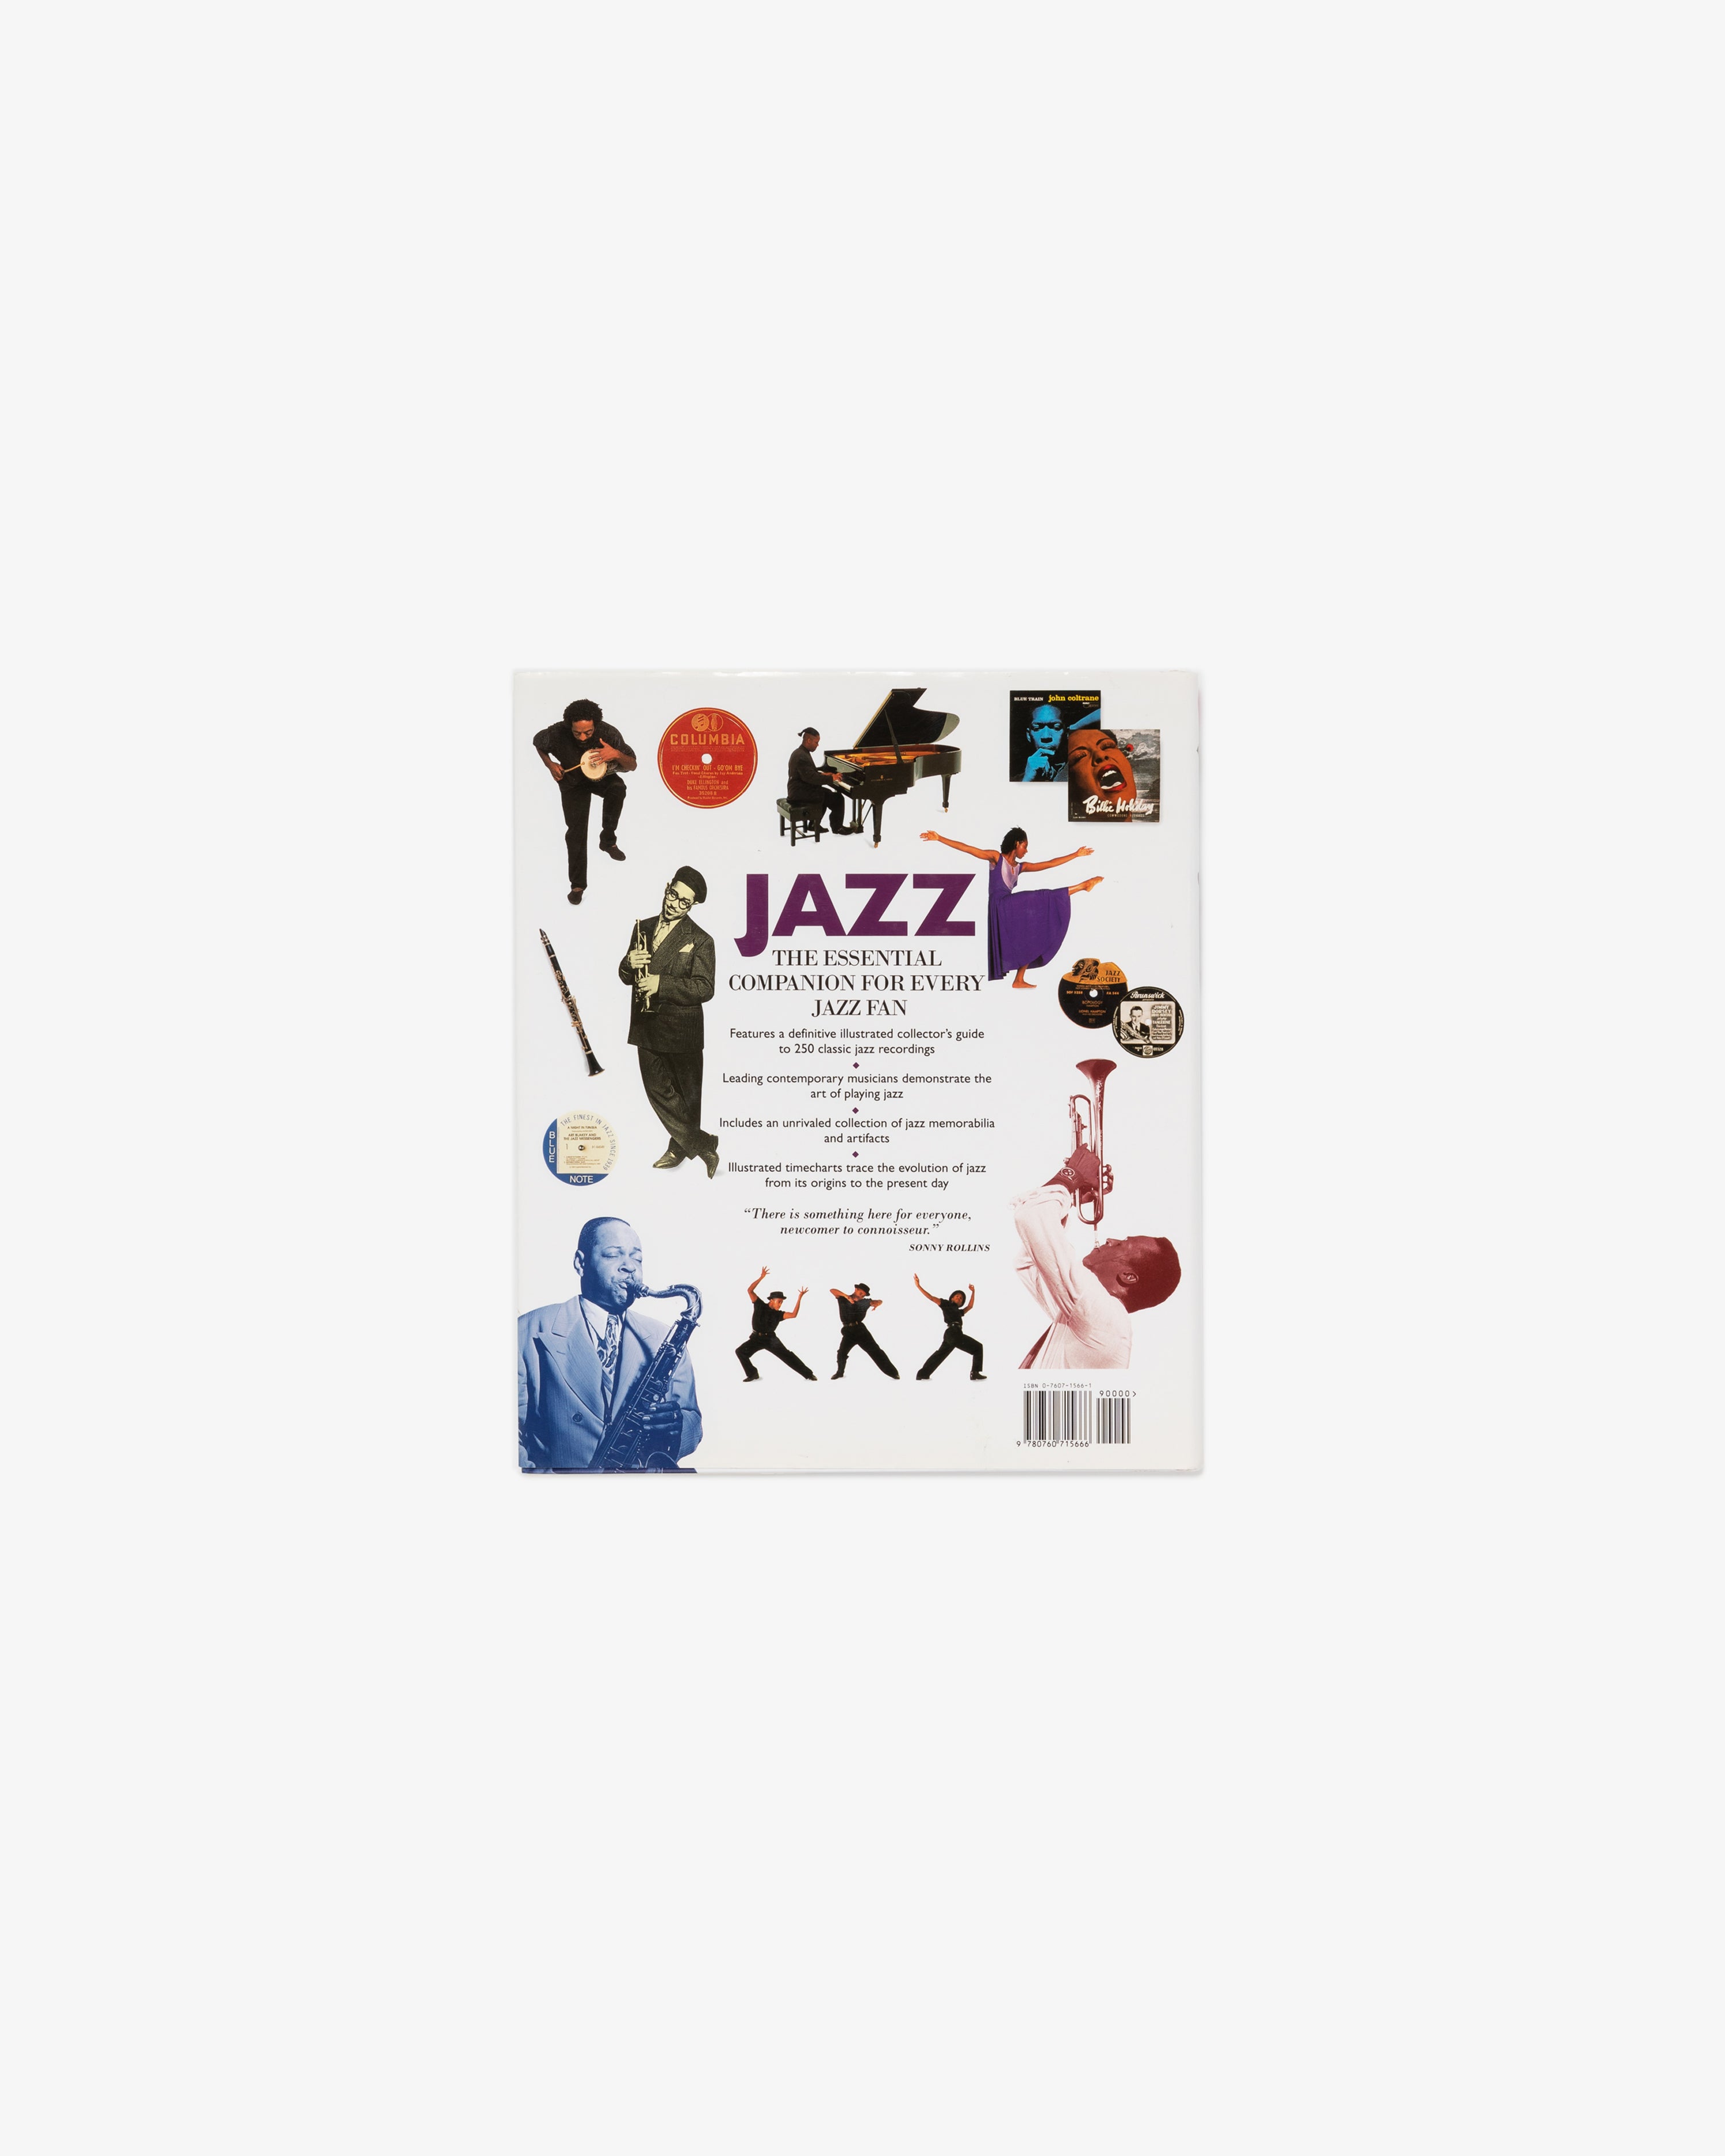 Jazz: History, Instruments, Musicians, Recordings Book